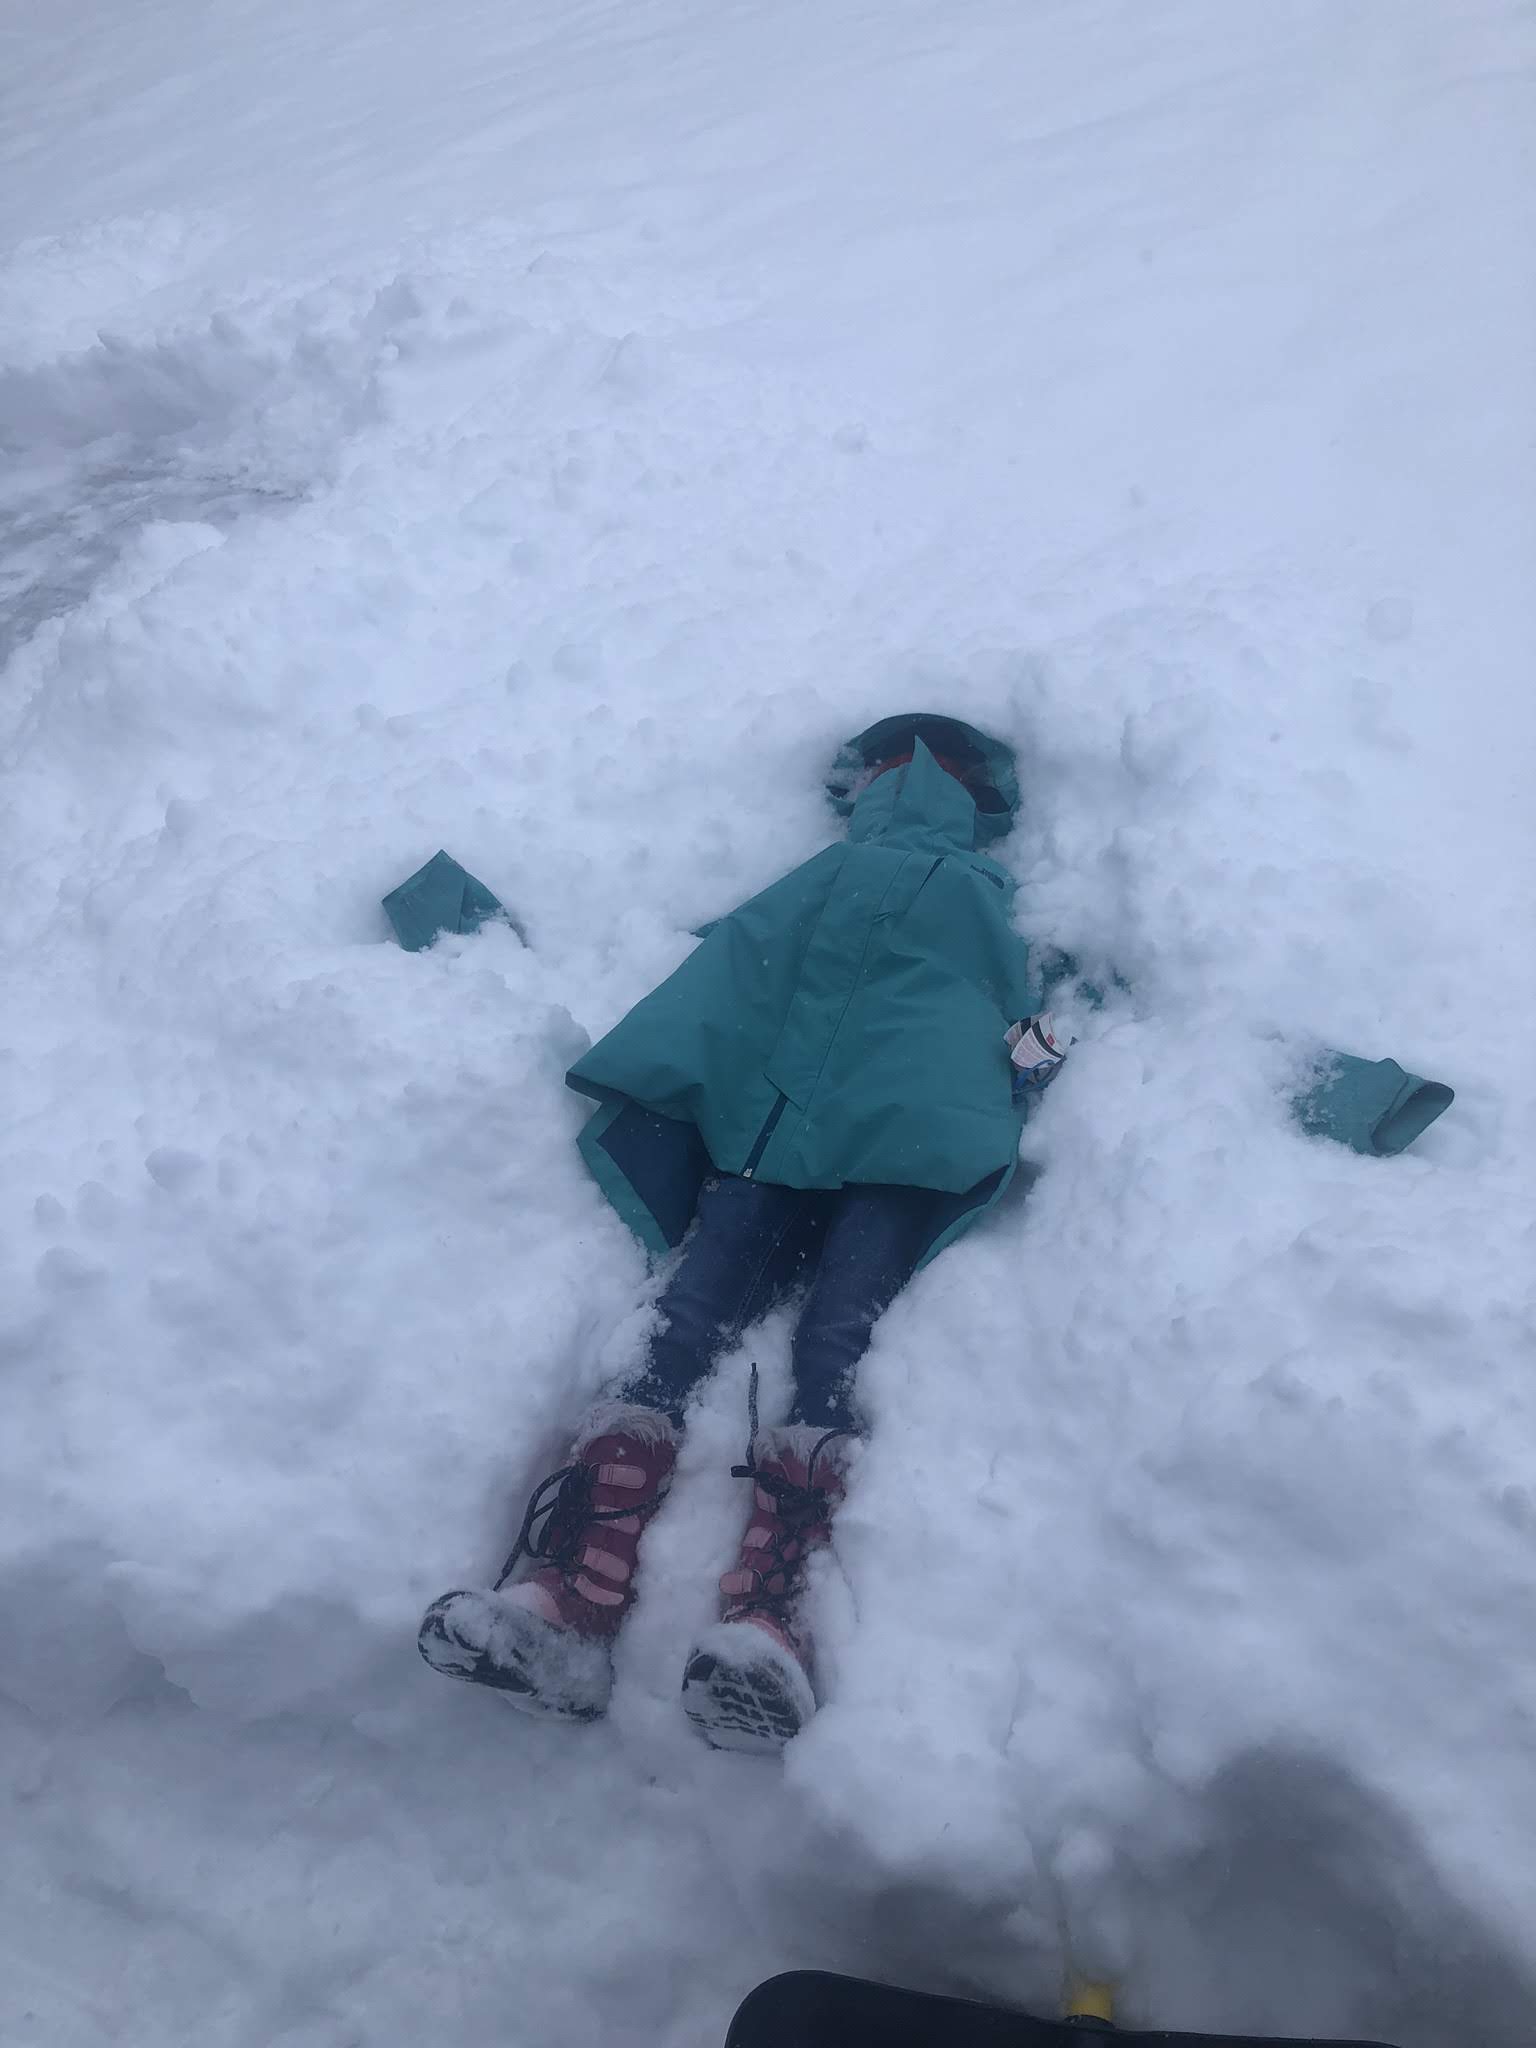 Child in Snow